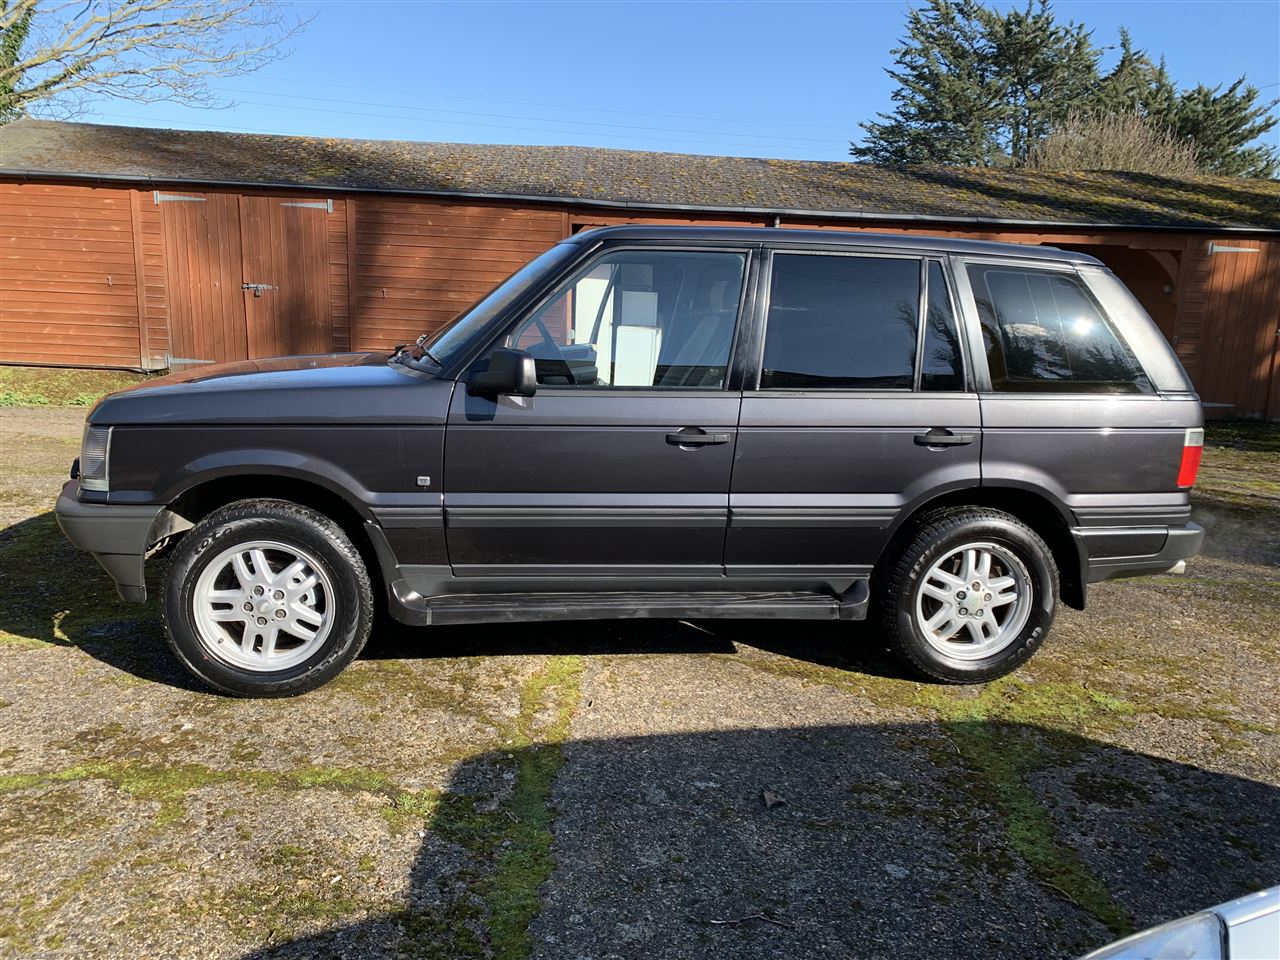 Spring Classic: 20 Apr 2021 - 1997 Land Rover Range Rover Ltd Edition